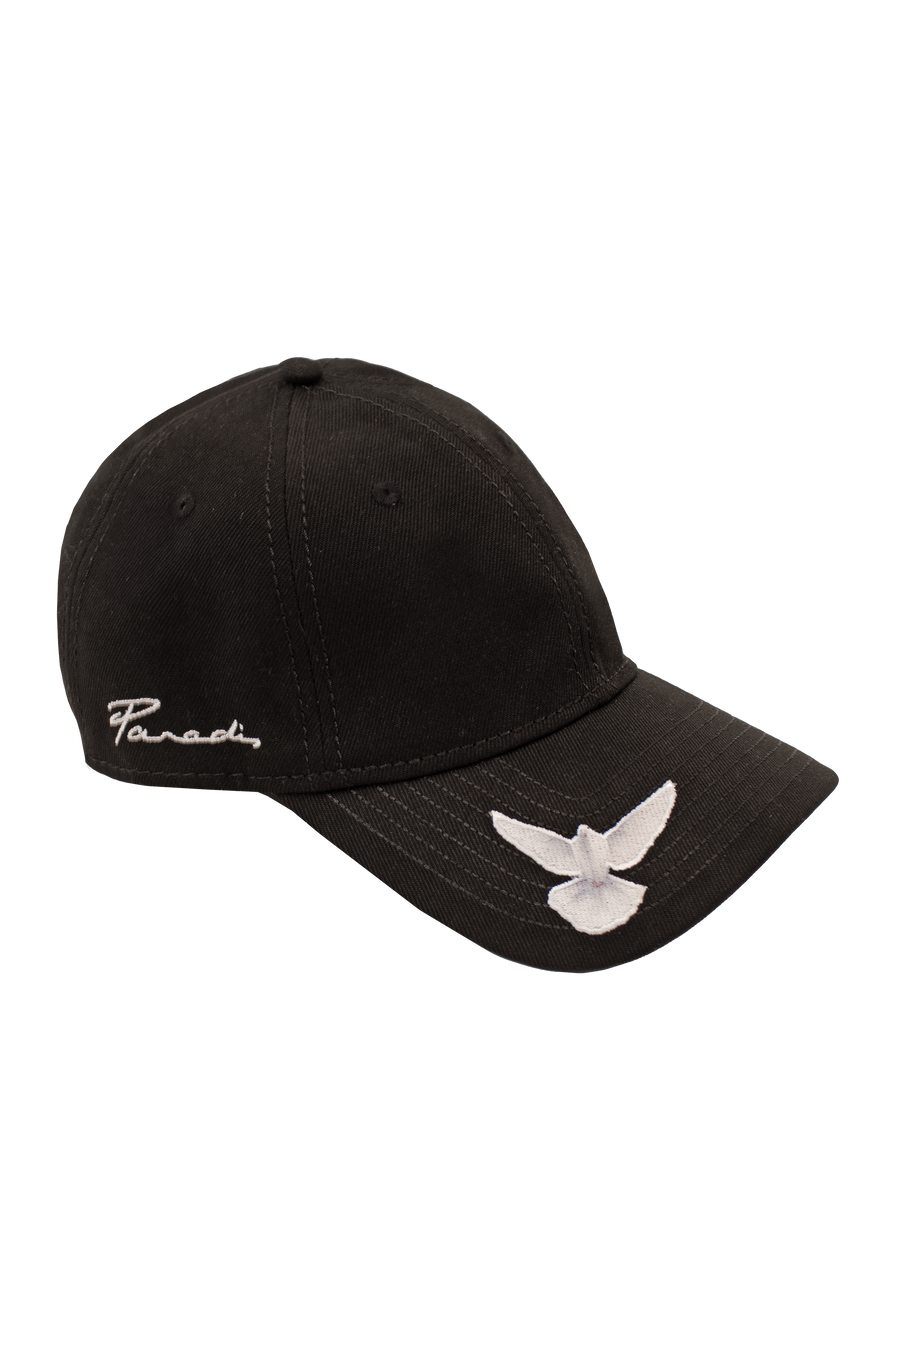 3.PARADIS & New Era - Black 9TWENTY Cap with Dove Brim